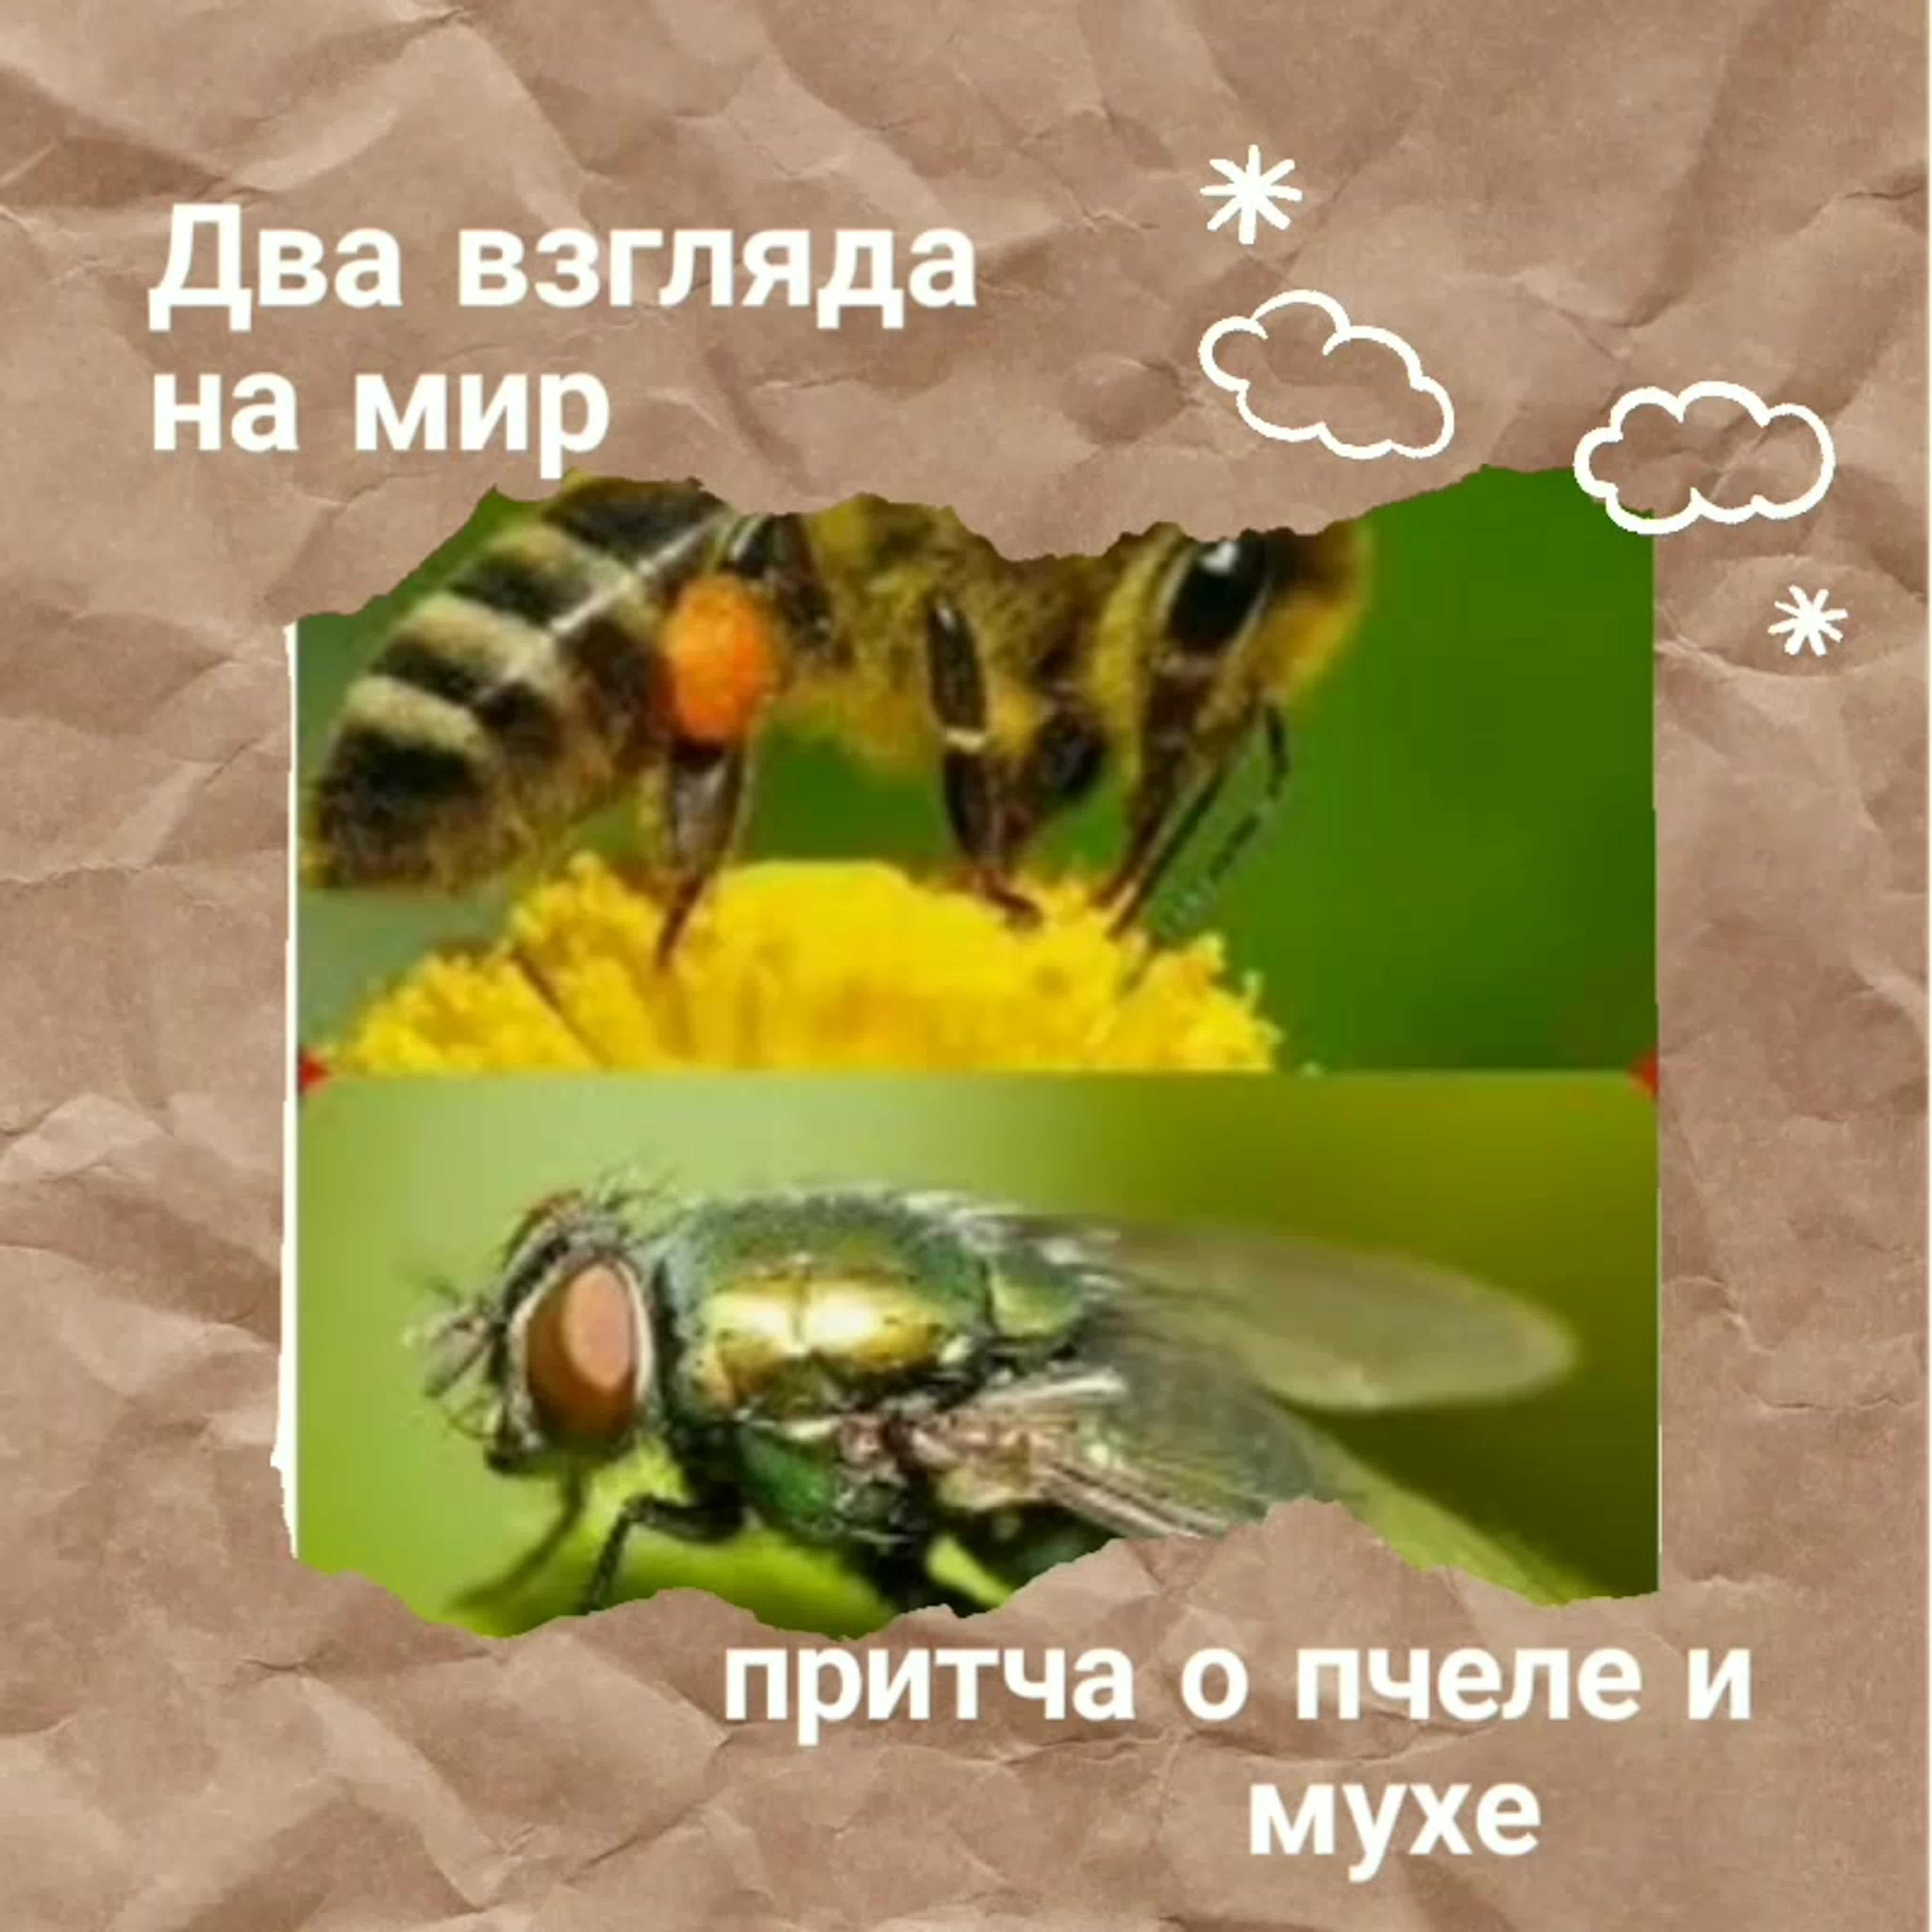 Притча о мухе. Два взгляда на мир. Притча о пчеле и мухе. Два взгляда на мир Муха и пчела. Взгляд мухи и пчелы.